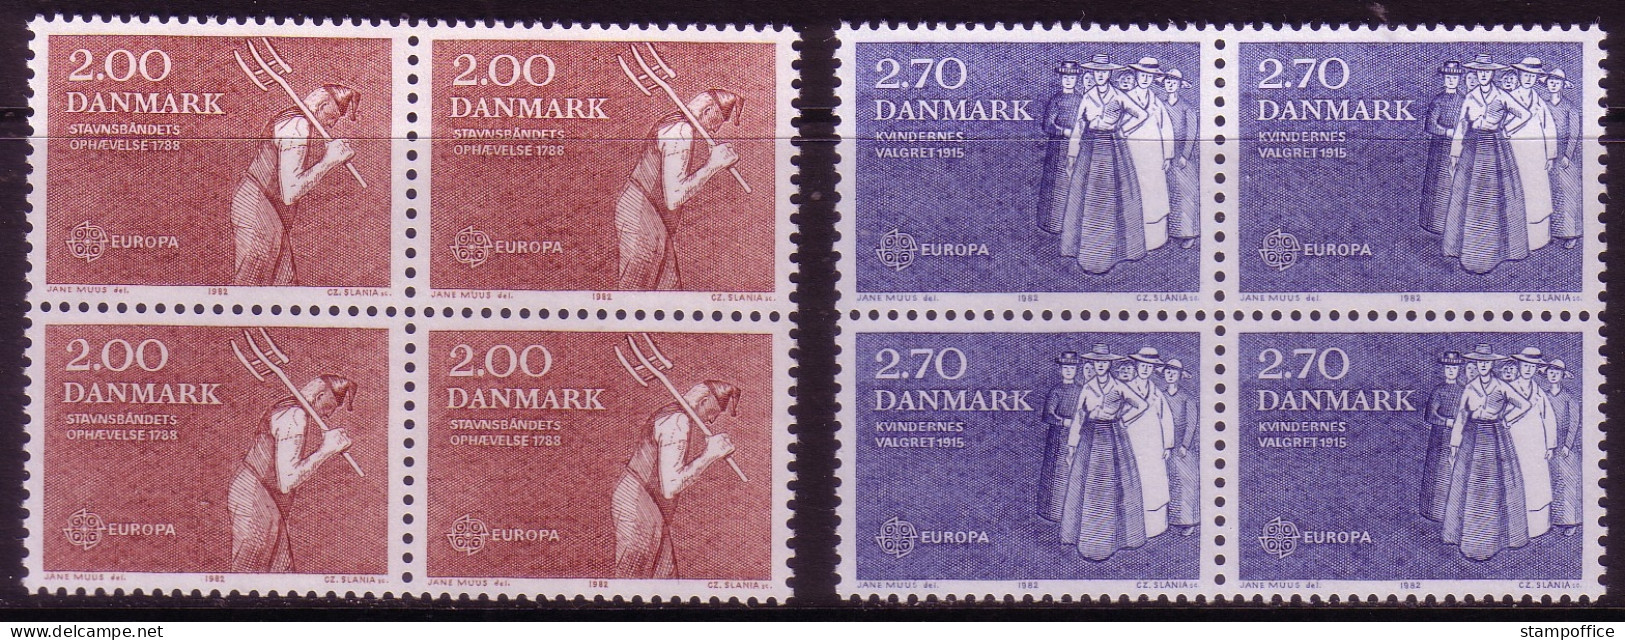 DÄNEMARK MI-NR. 749-750 POSTFRISCH(MINT) 4er BLOCK EUROPA 1982 FRAUENWAHLRECHT - 1982